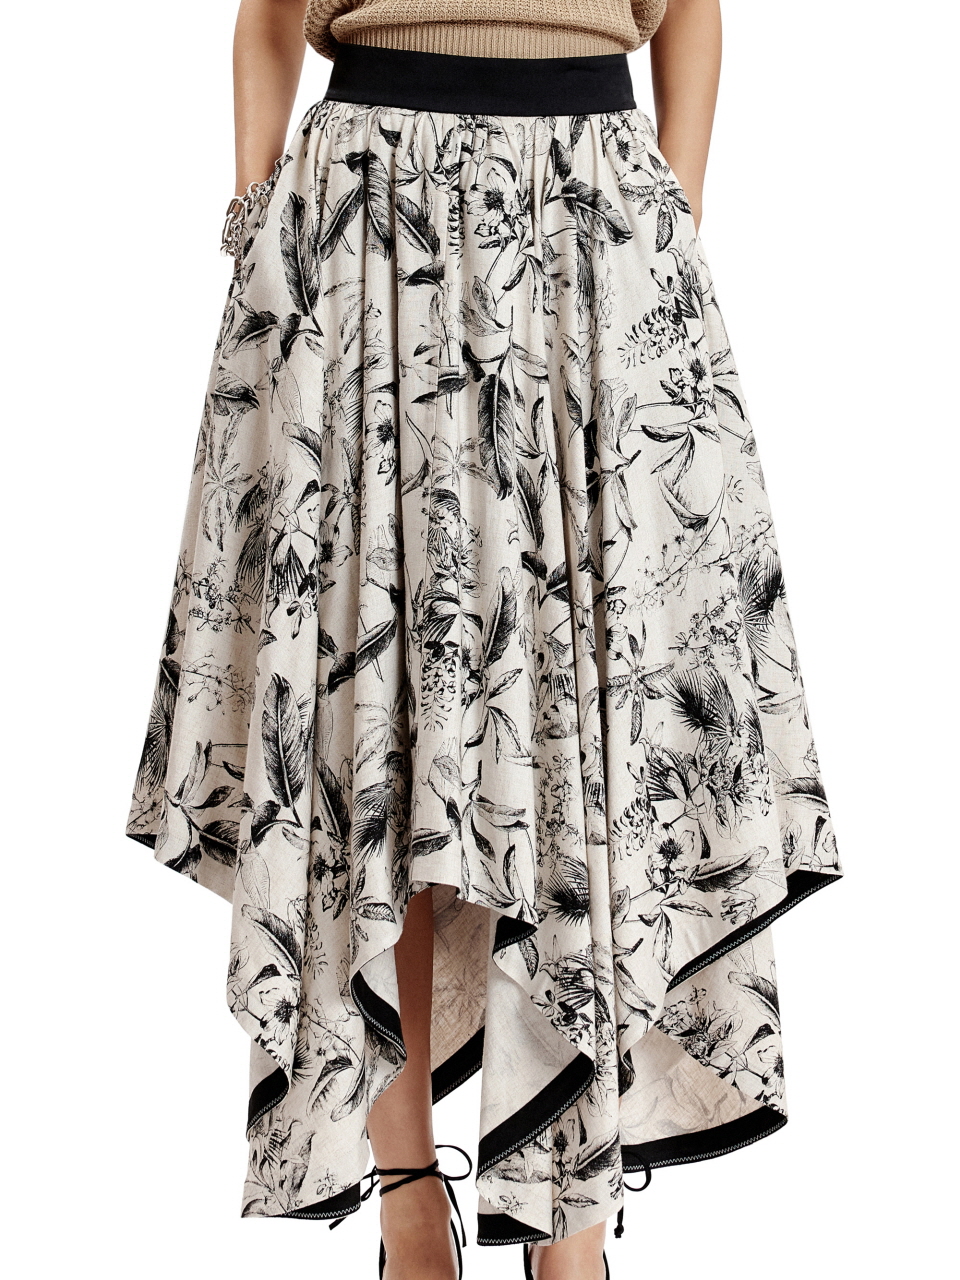 Ivory &amp; Black Floral Print Flared Skirt